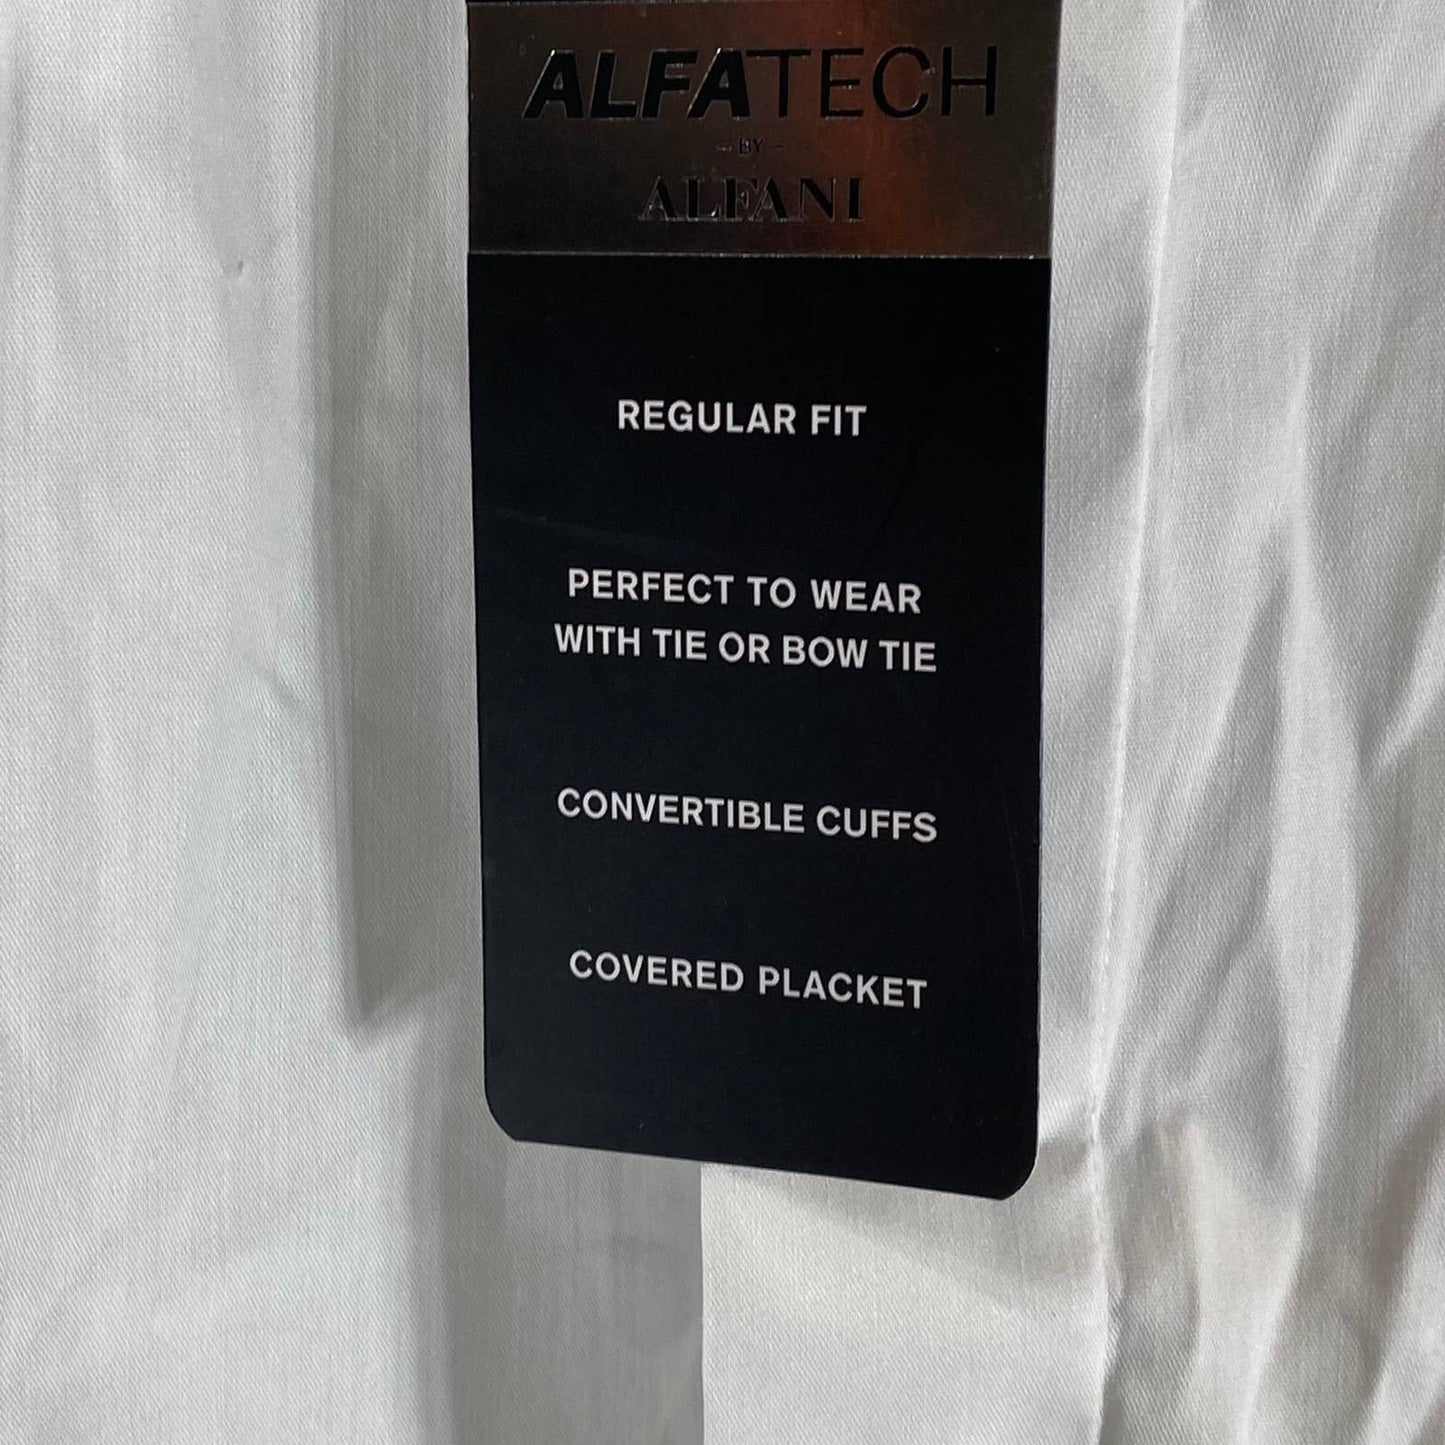 ALFANI AlfaTech Men's White Solid Regular-Fit Dress Shirt SZ S(14-14.5 32/33)